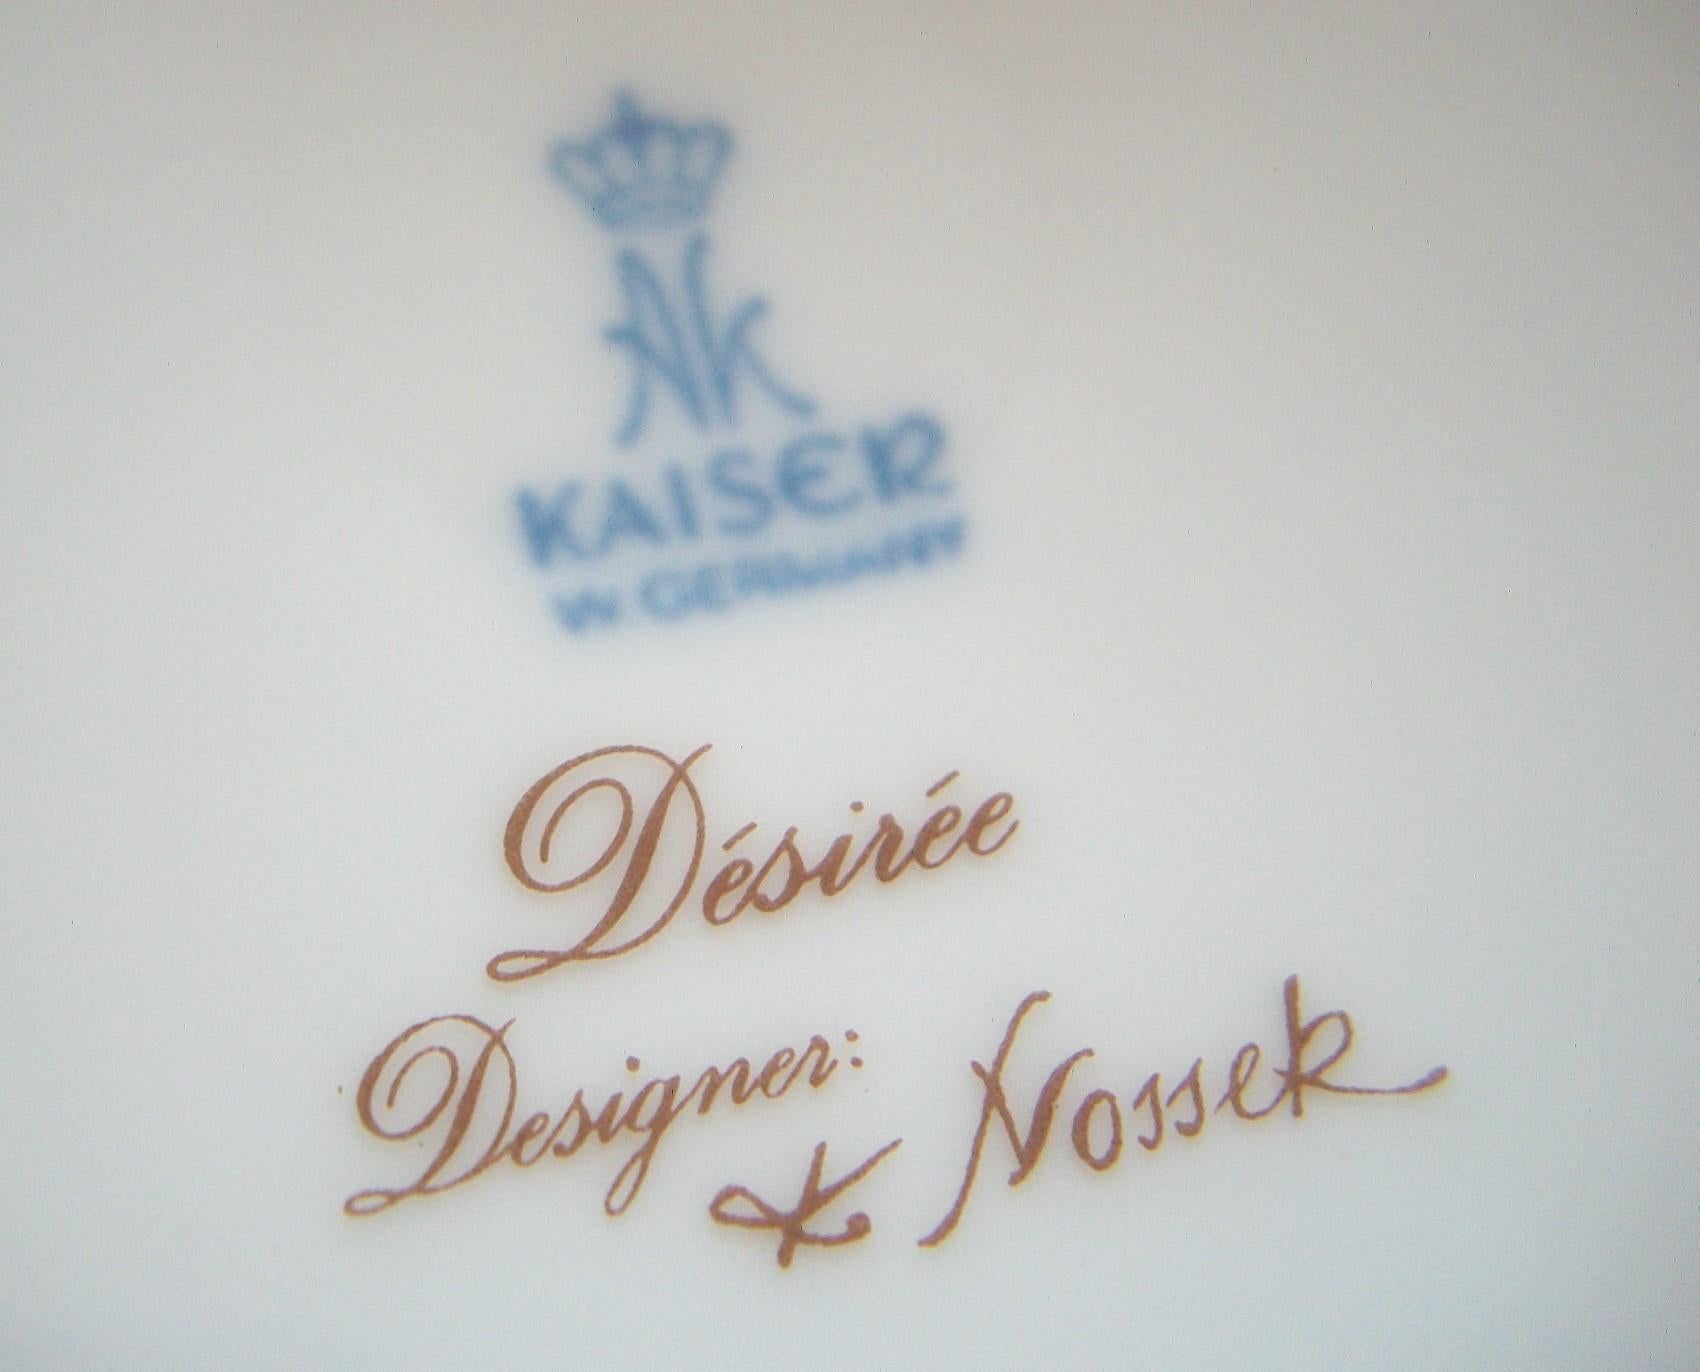 Kaiser - K. Nossek, Vintage Porcelain Urn and Cover, Germany, Mid-20th Century For Sale 7